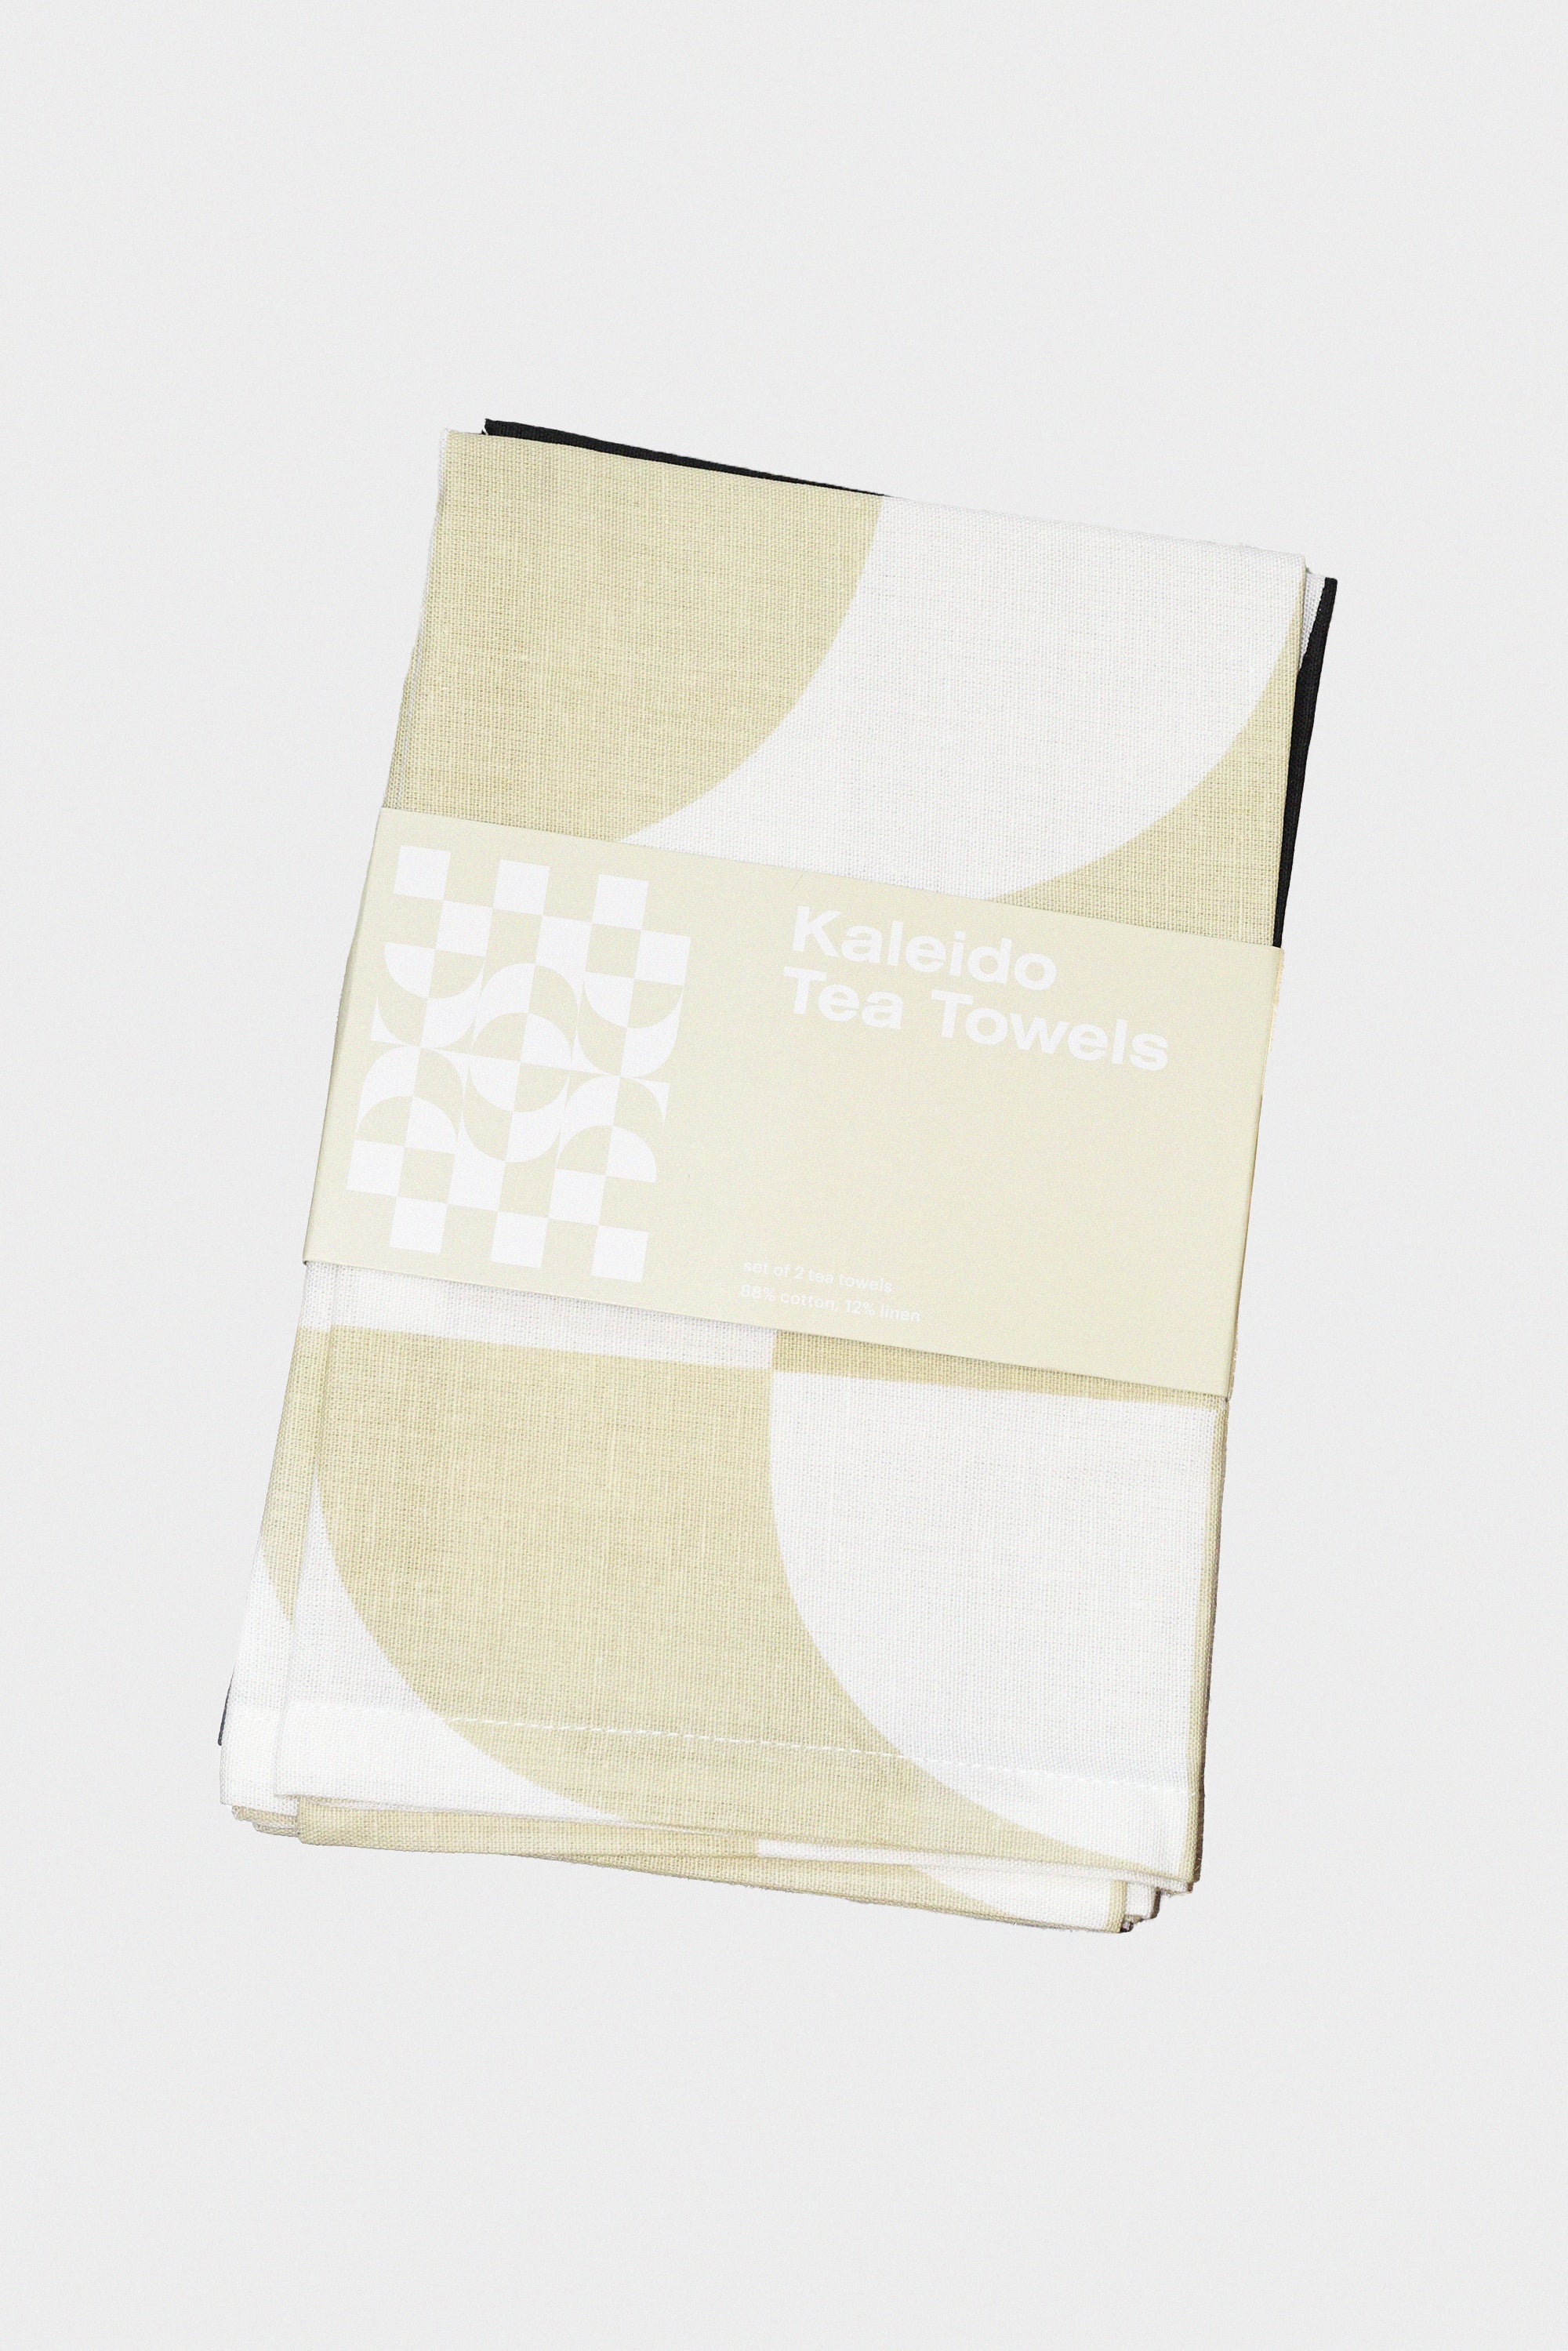 Kaleido Tea Towels